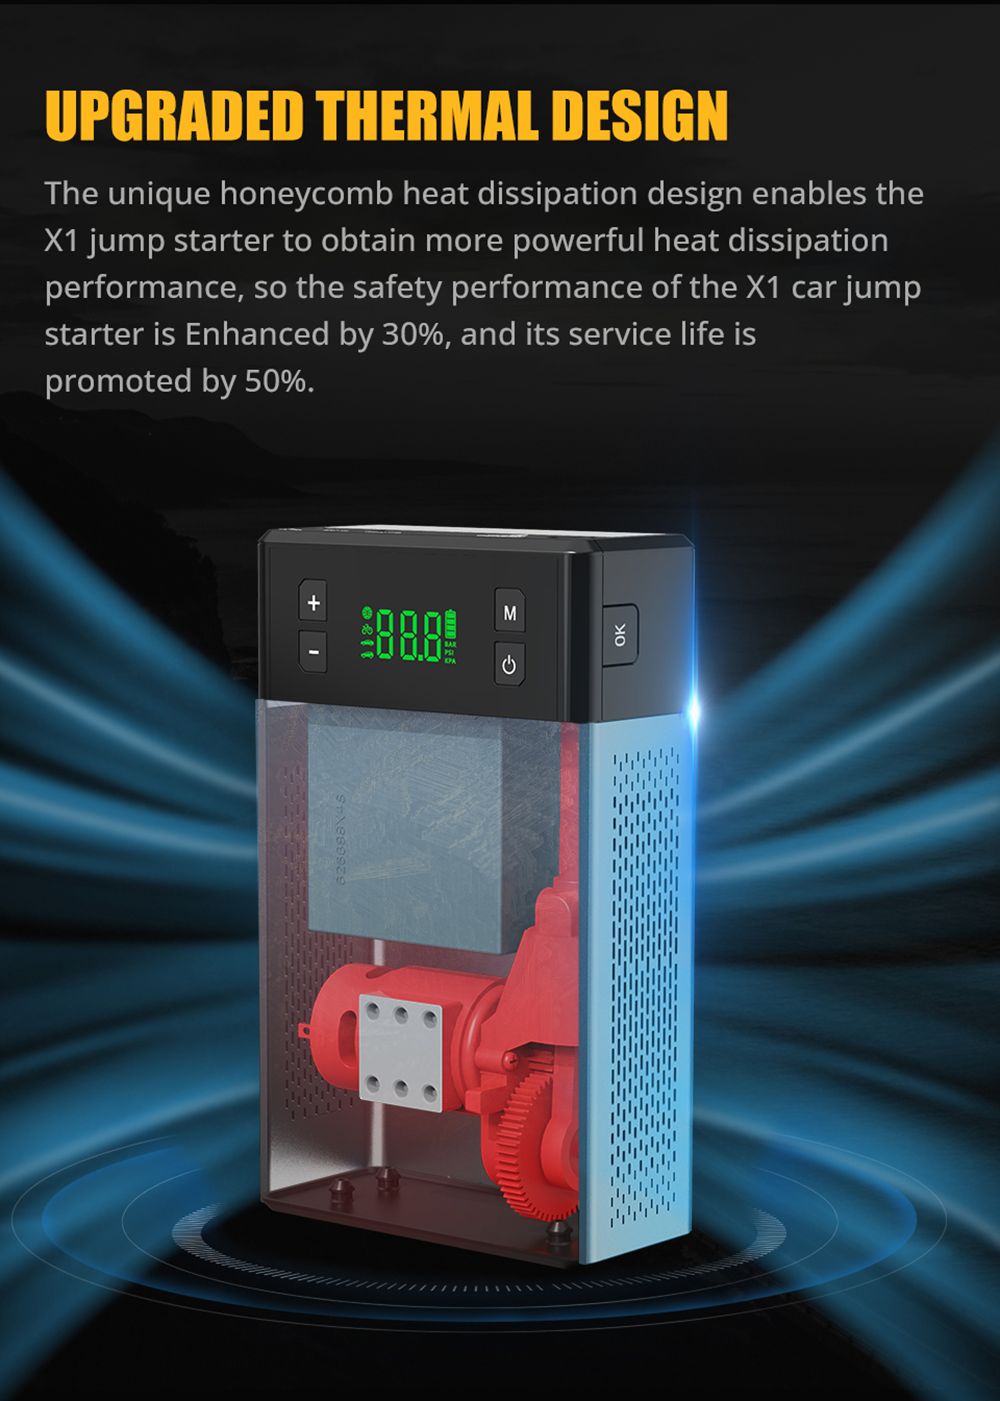 VTOMAN X1 Jump Starter with 100PSI Air Compressor, 12V Lithium Battery Jump Box, 400 Lumen LED - Black